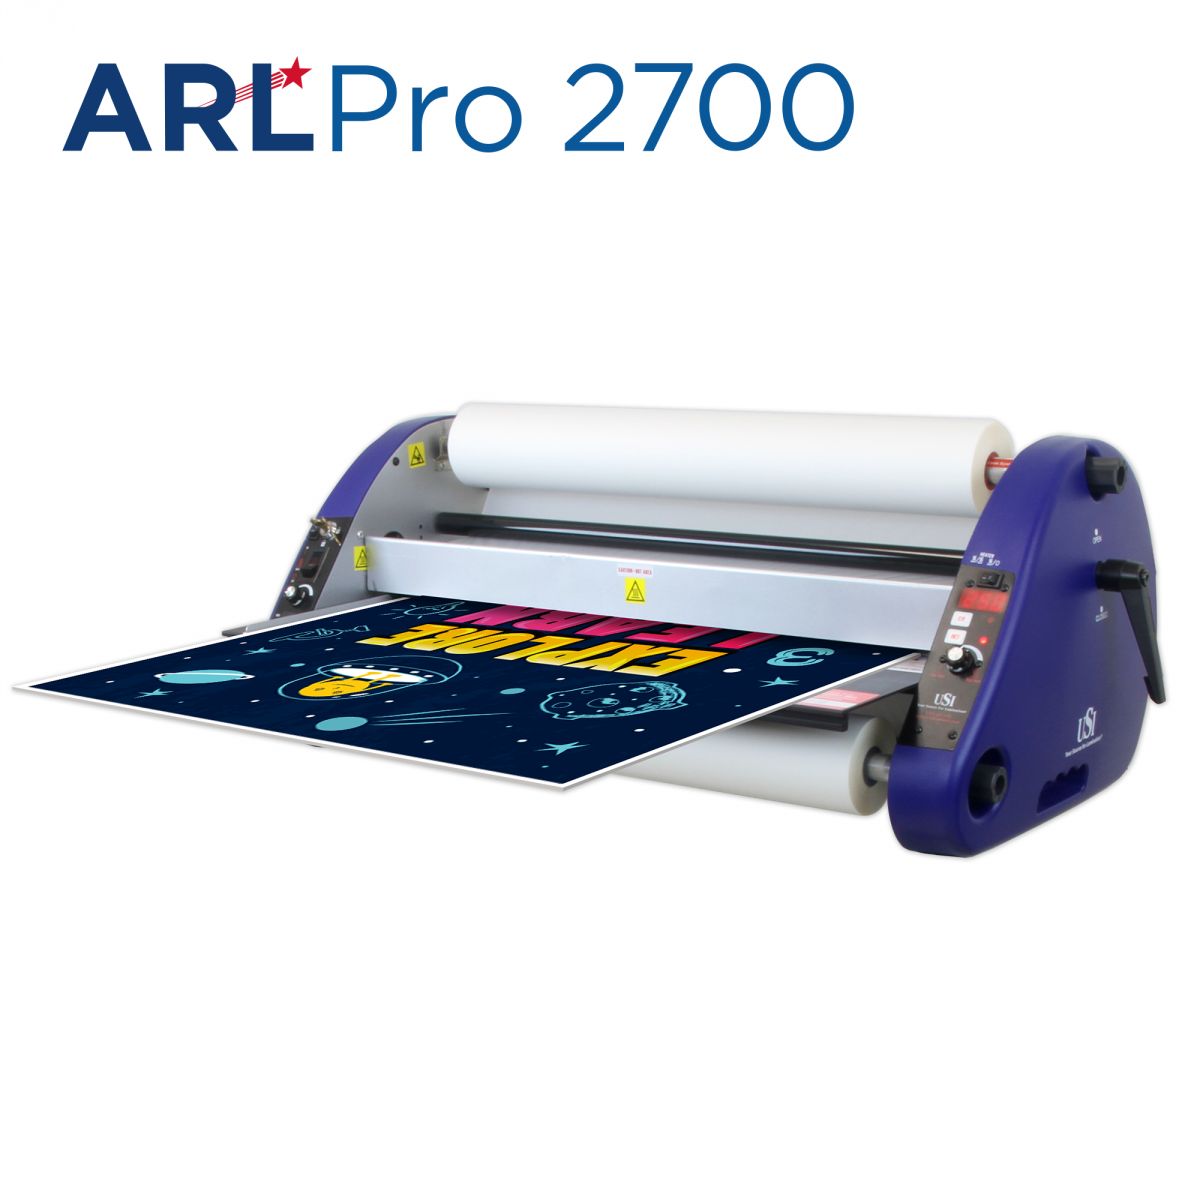 USI ARL Pro 2700 27" Mounting Roll Laminator $1,647.88